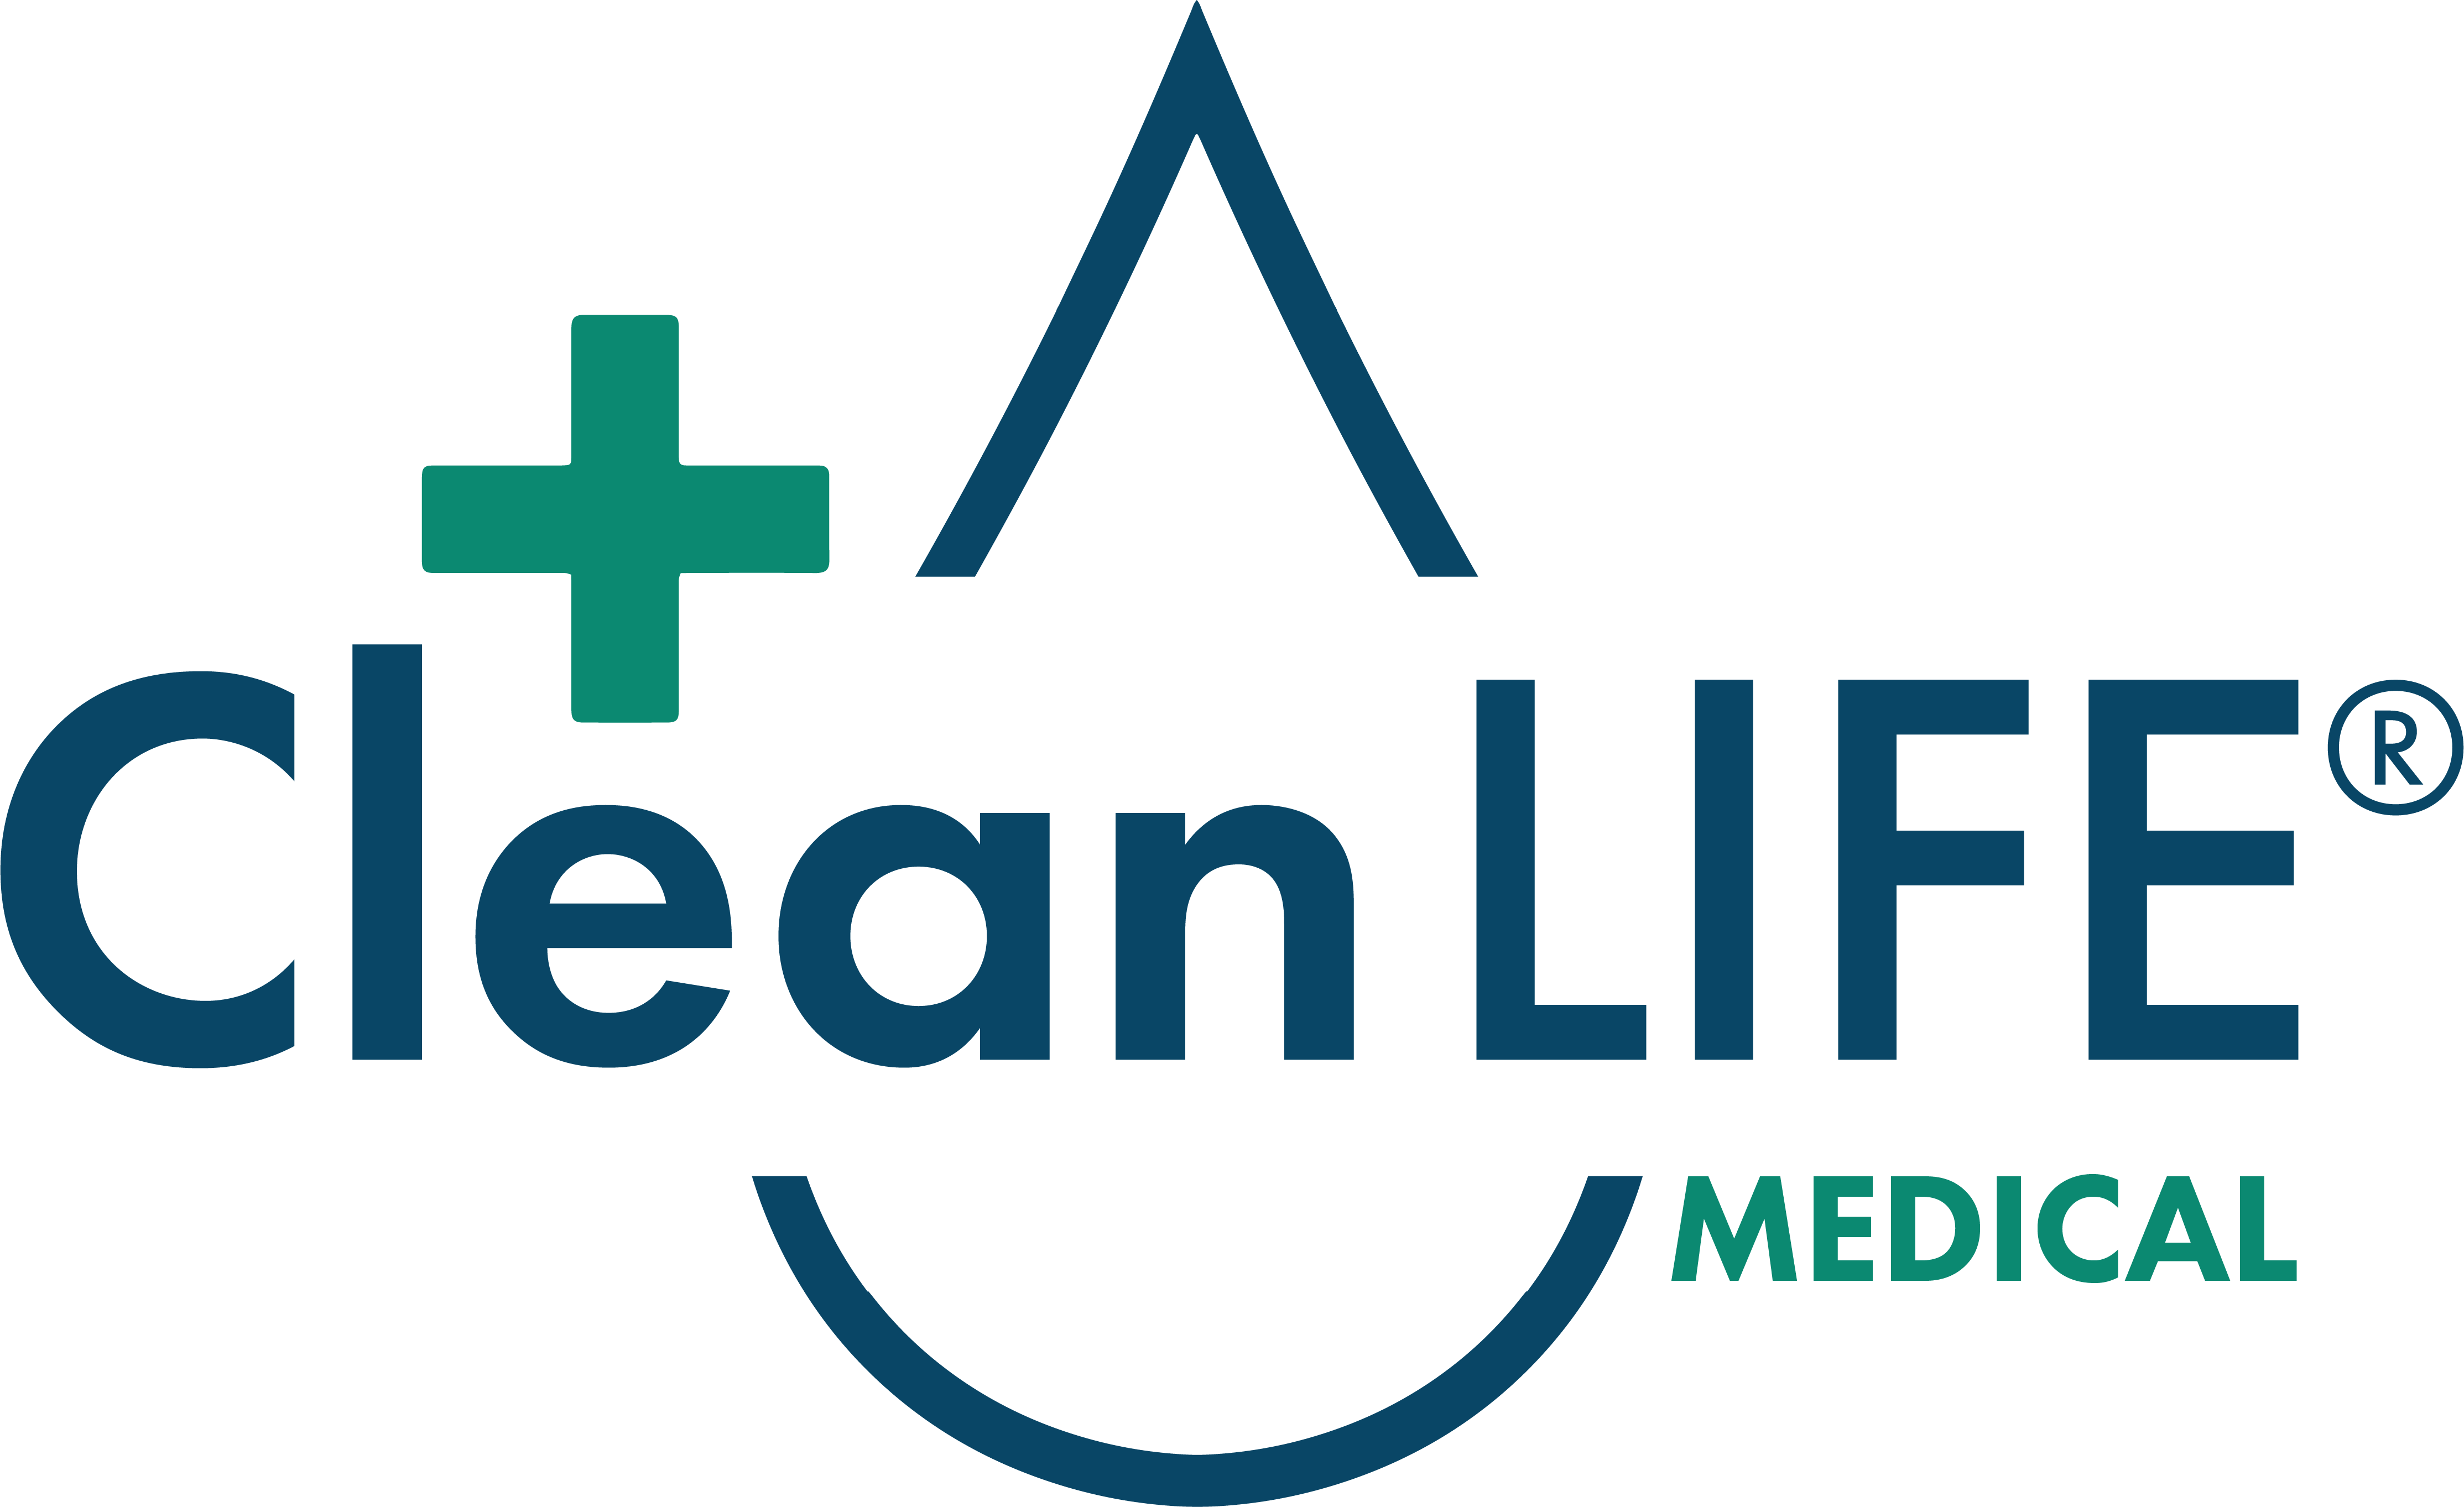 CleanLIFE Medical Logo